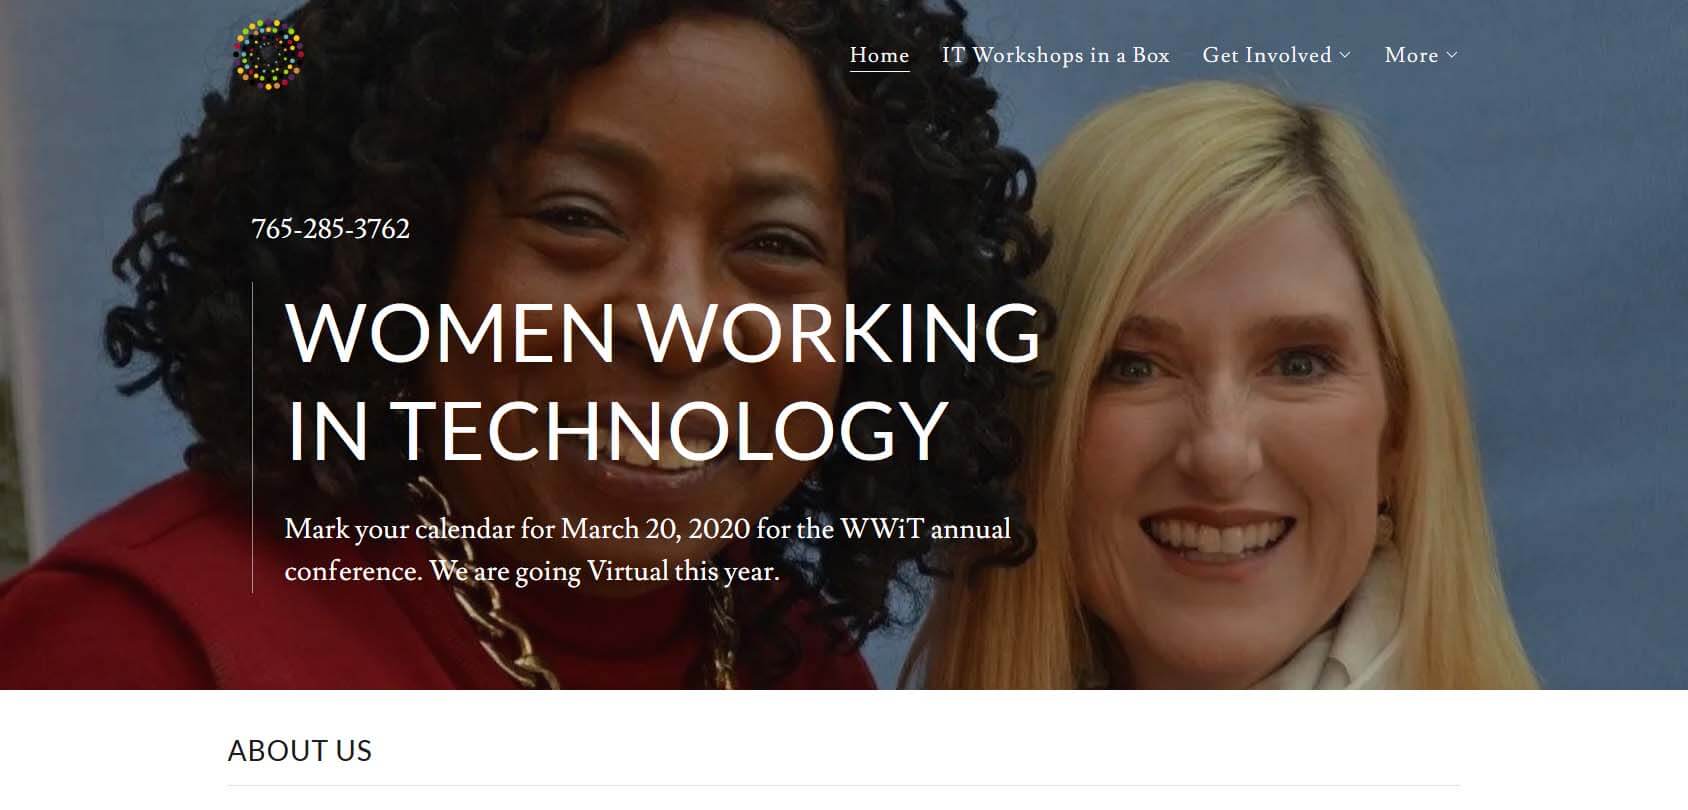 Women Working in Technology Homepage